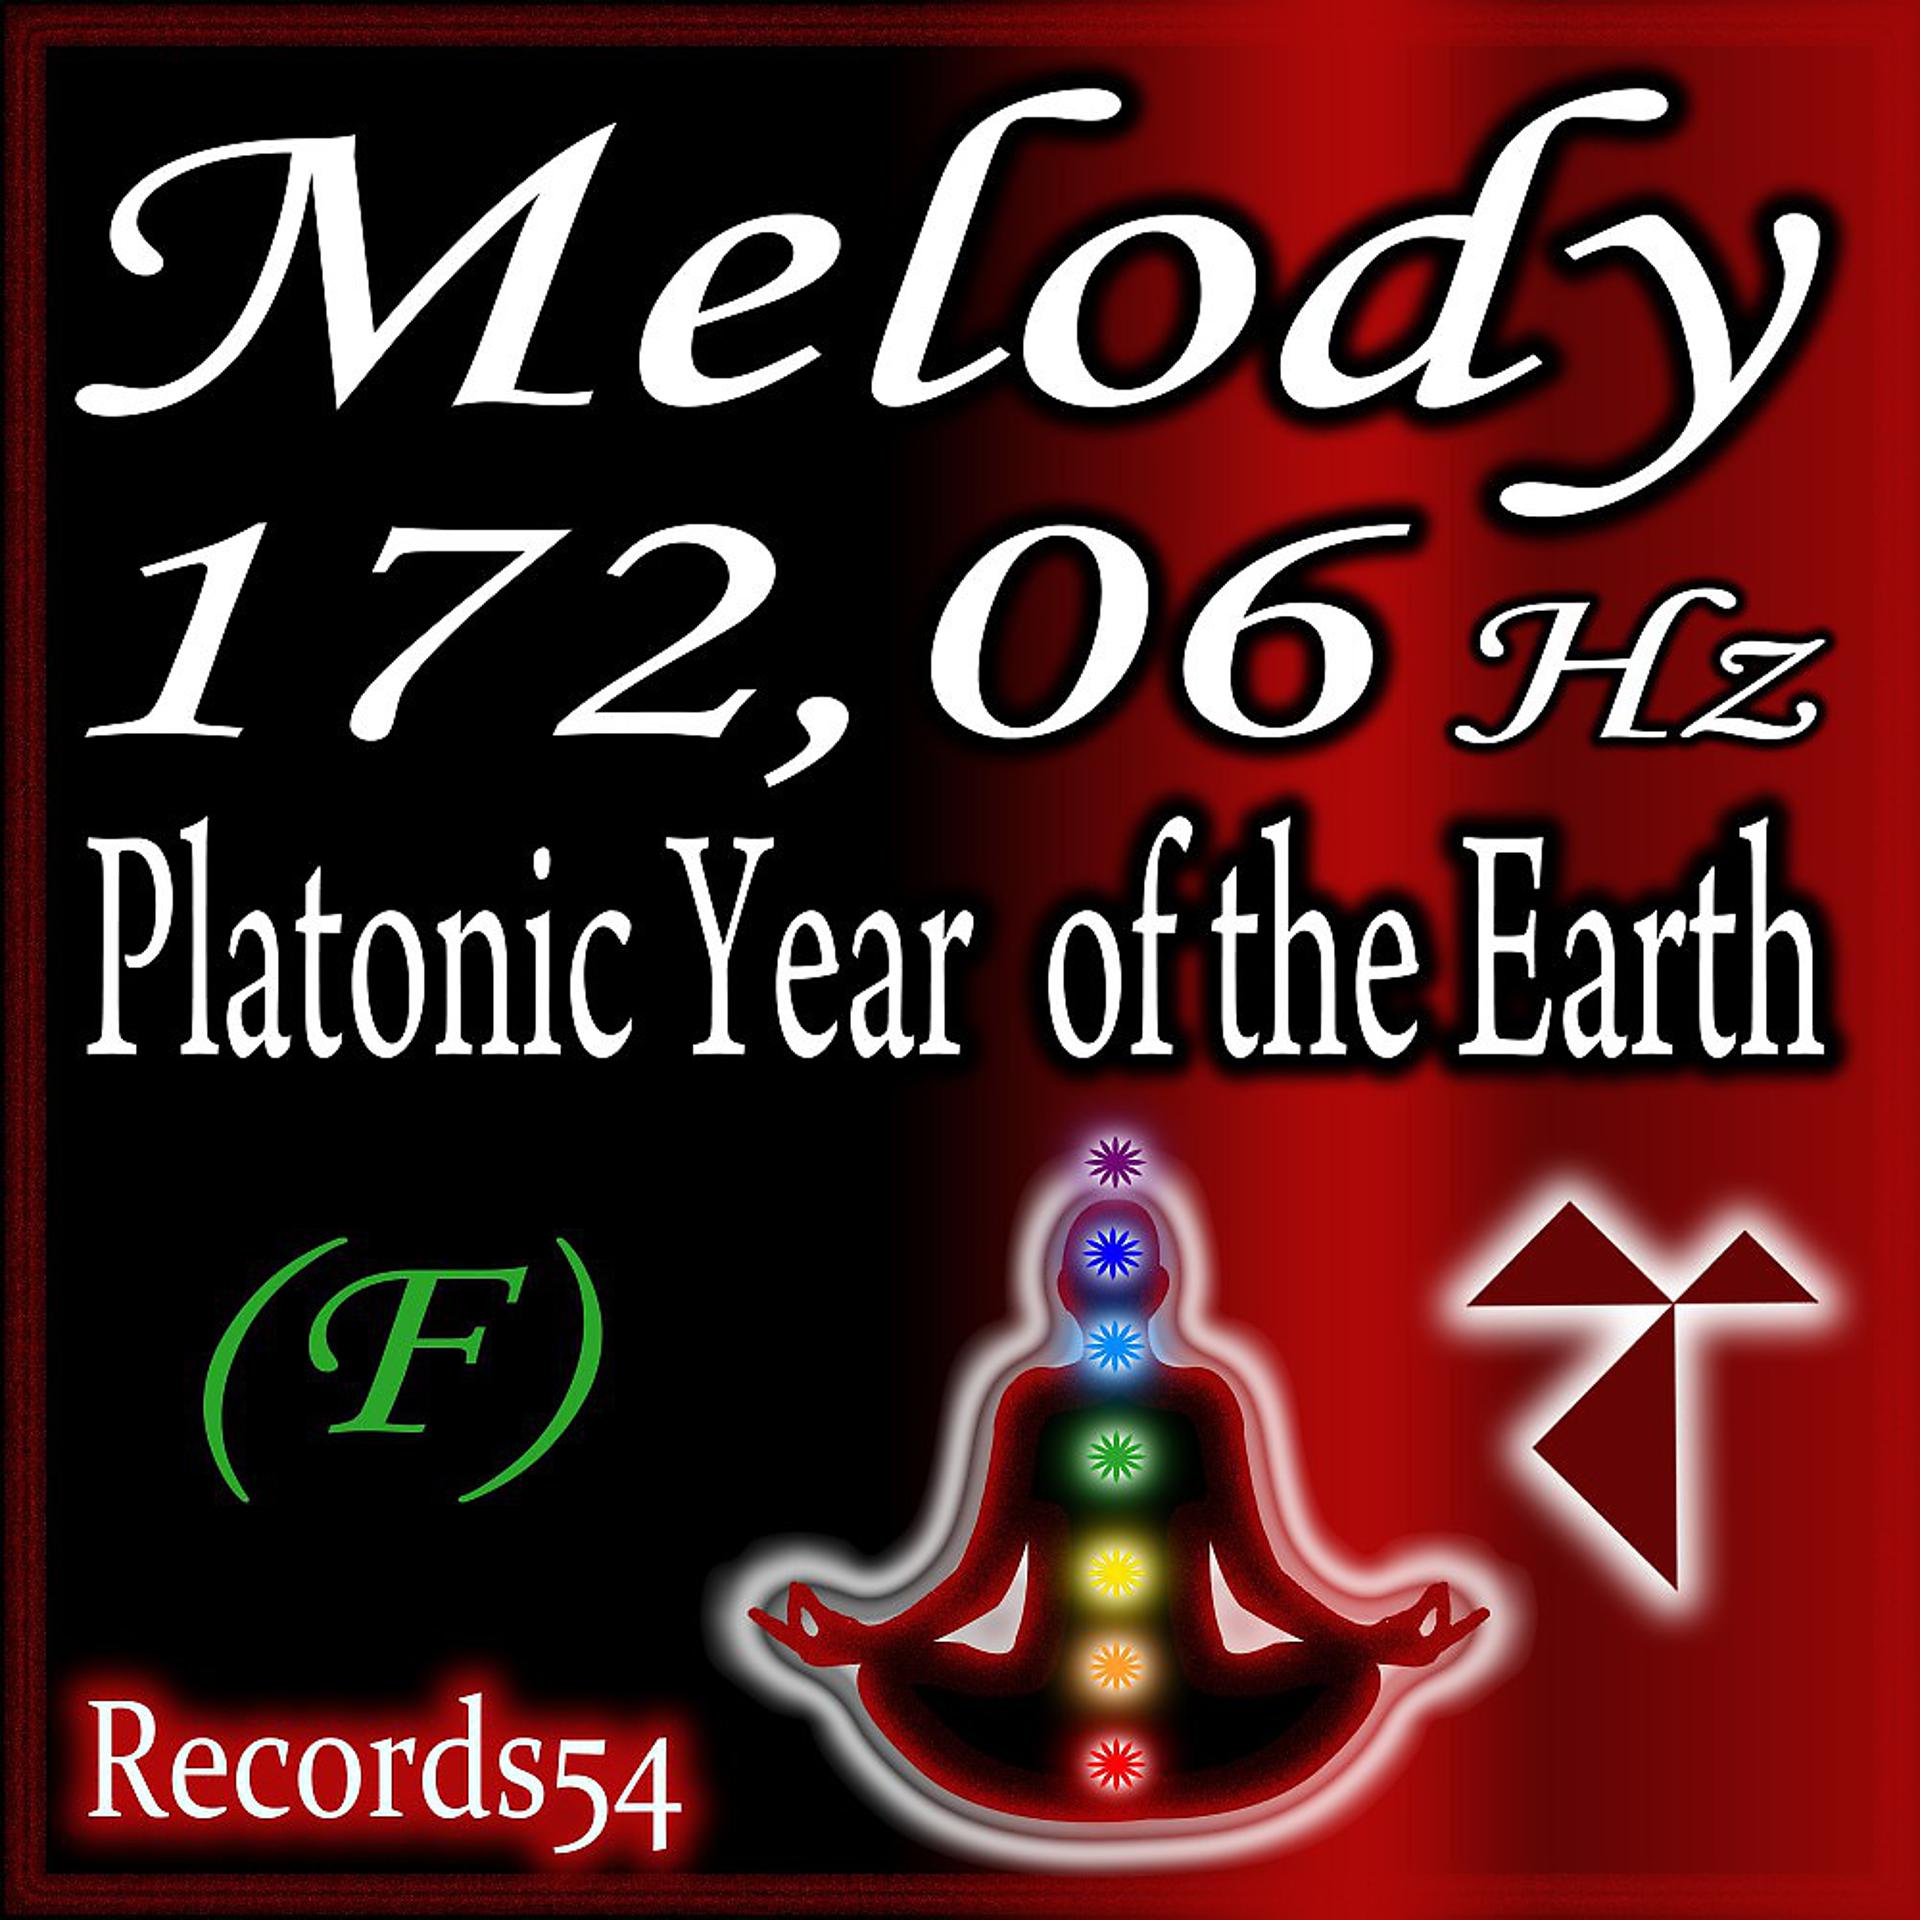 Постер альбома Melody - Platonic Year of the Earth 172.06 Hz F